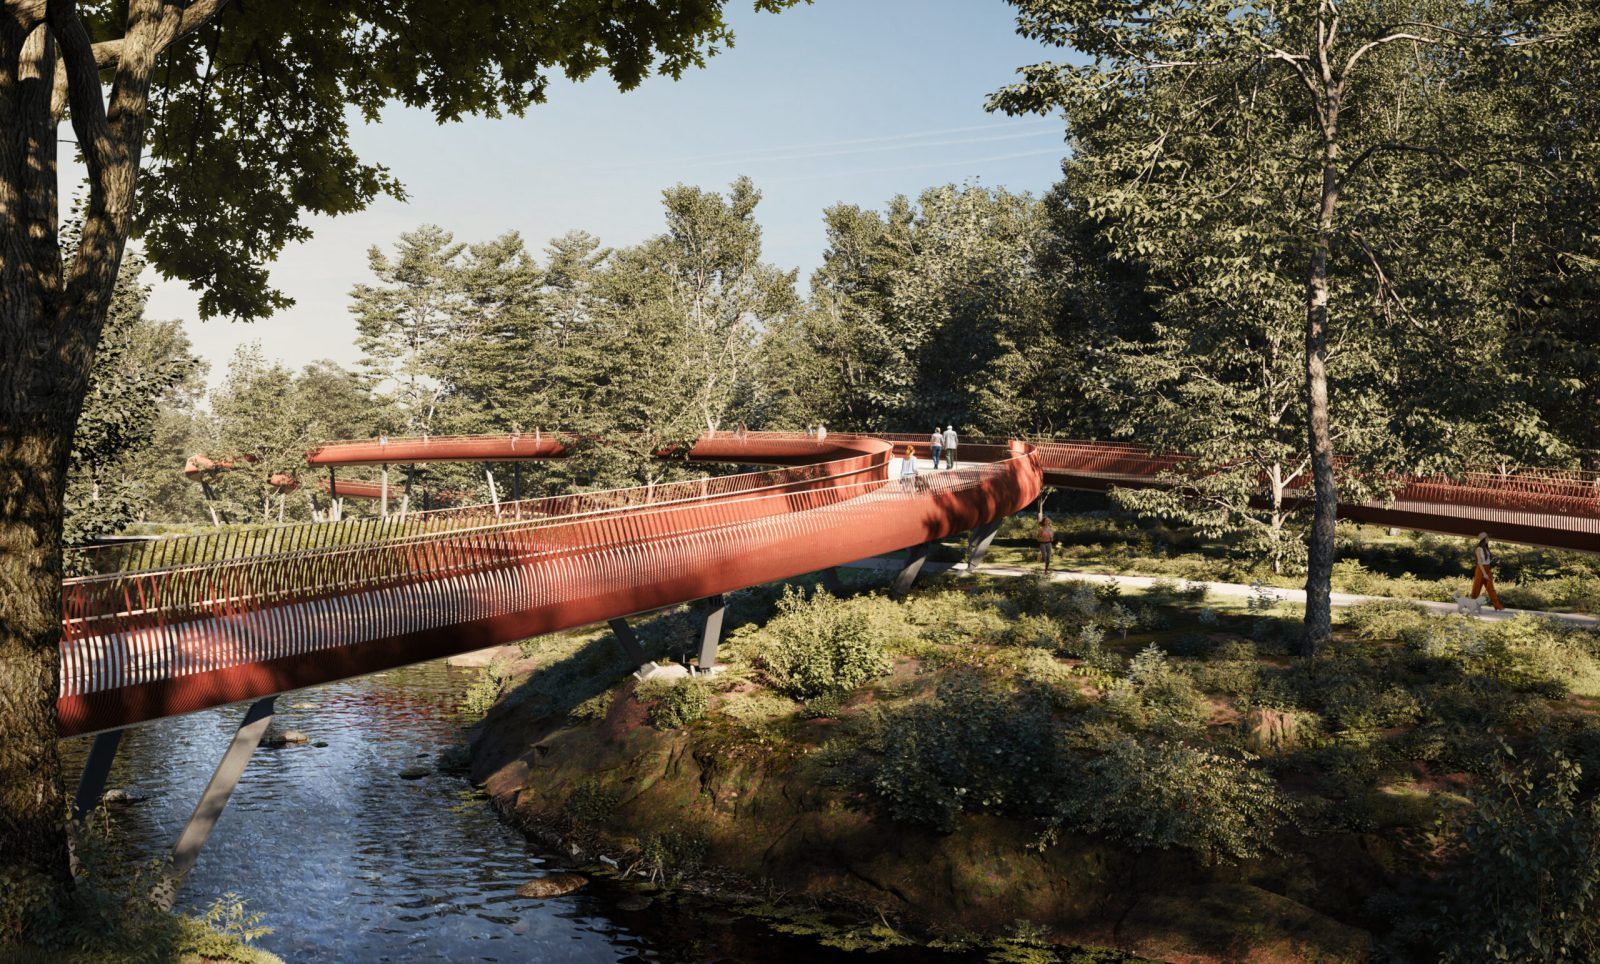 A new footbridge was built in Sofia’s popular park